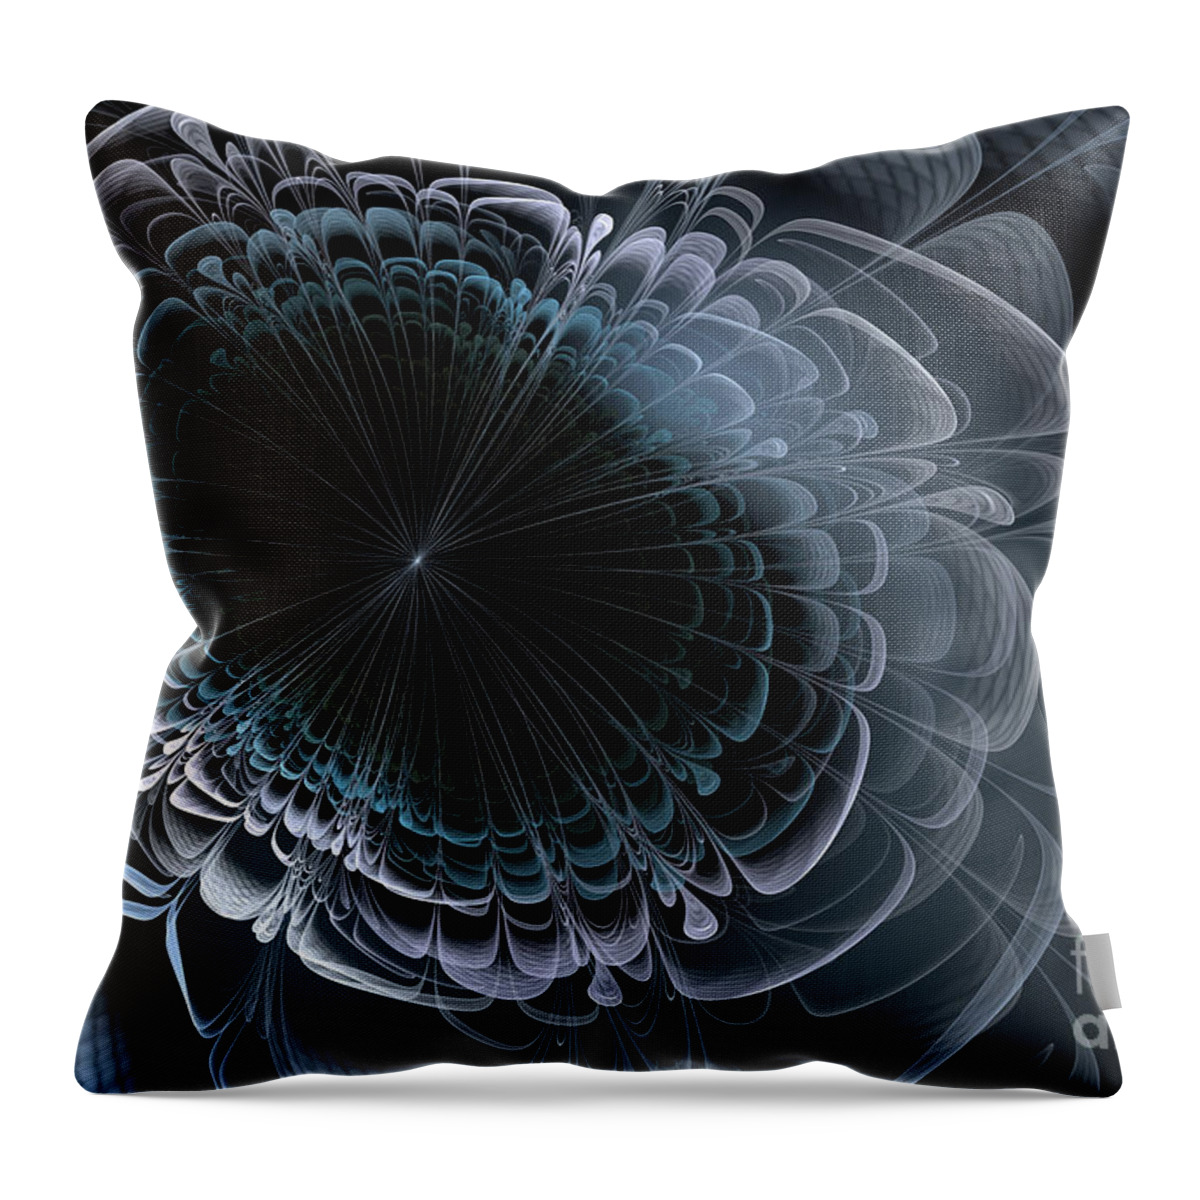 Sacred Geometry Throw Pillow featuring the digital art Dark Heart by John Edwards